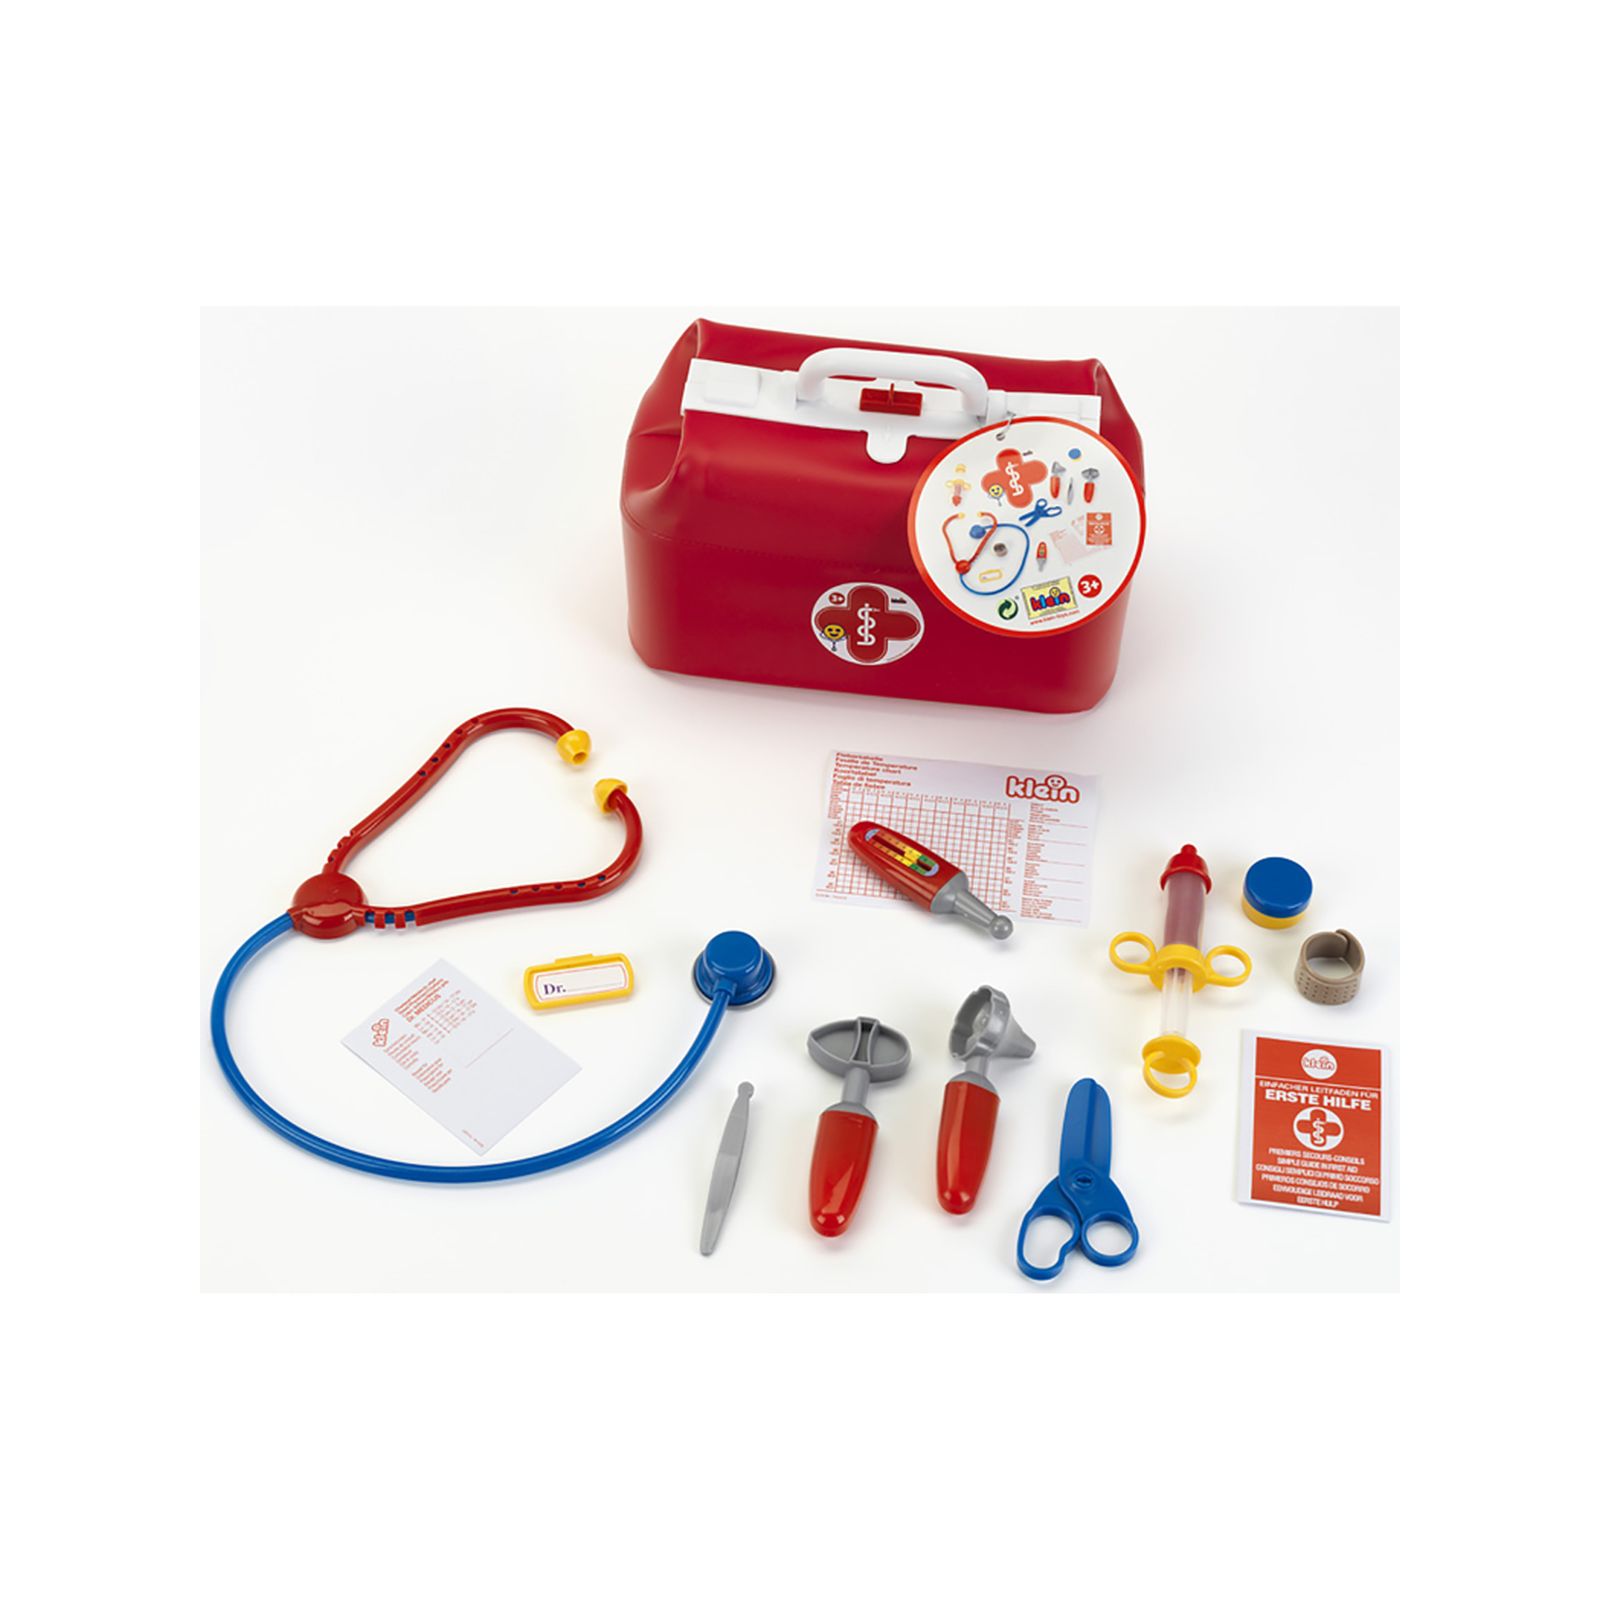 Valigetta Dottore Bambini,Kit Dottoressa Bambina,Valigetta Dottoressa  Bambina,Gioco Dottoressa Bambina Con Stetoscopio Termometro,Kit Dottore  Bambino